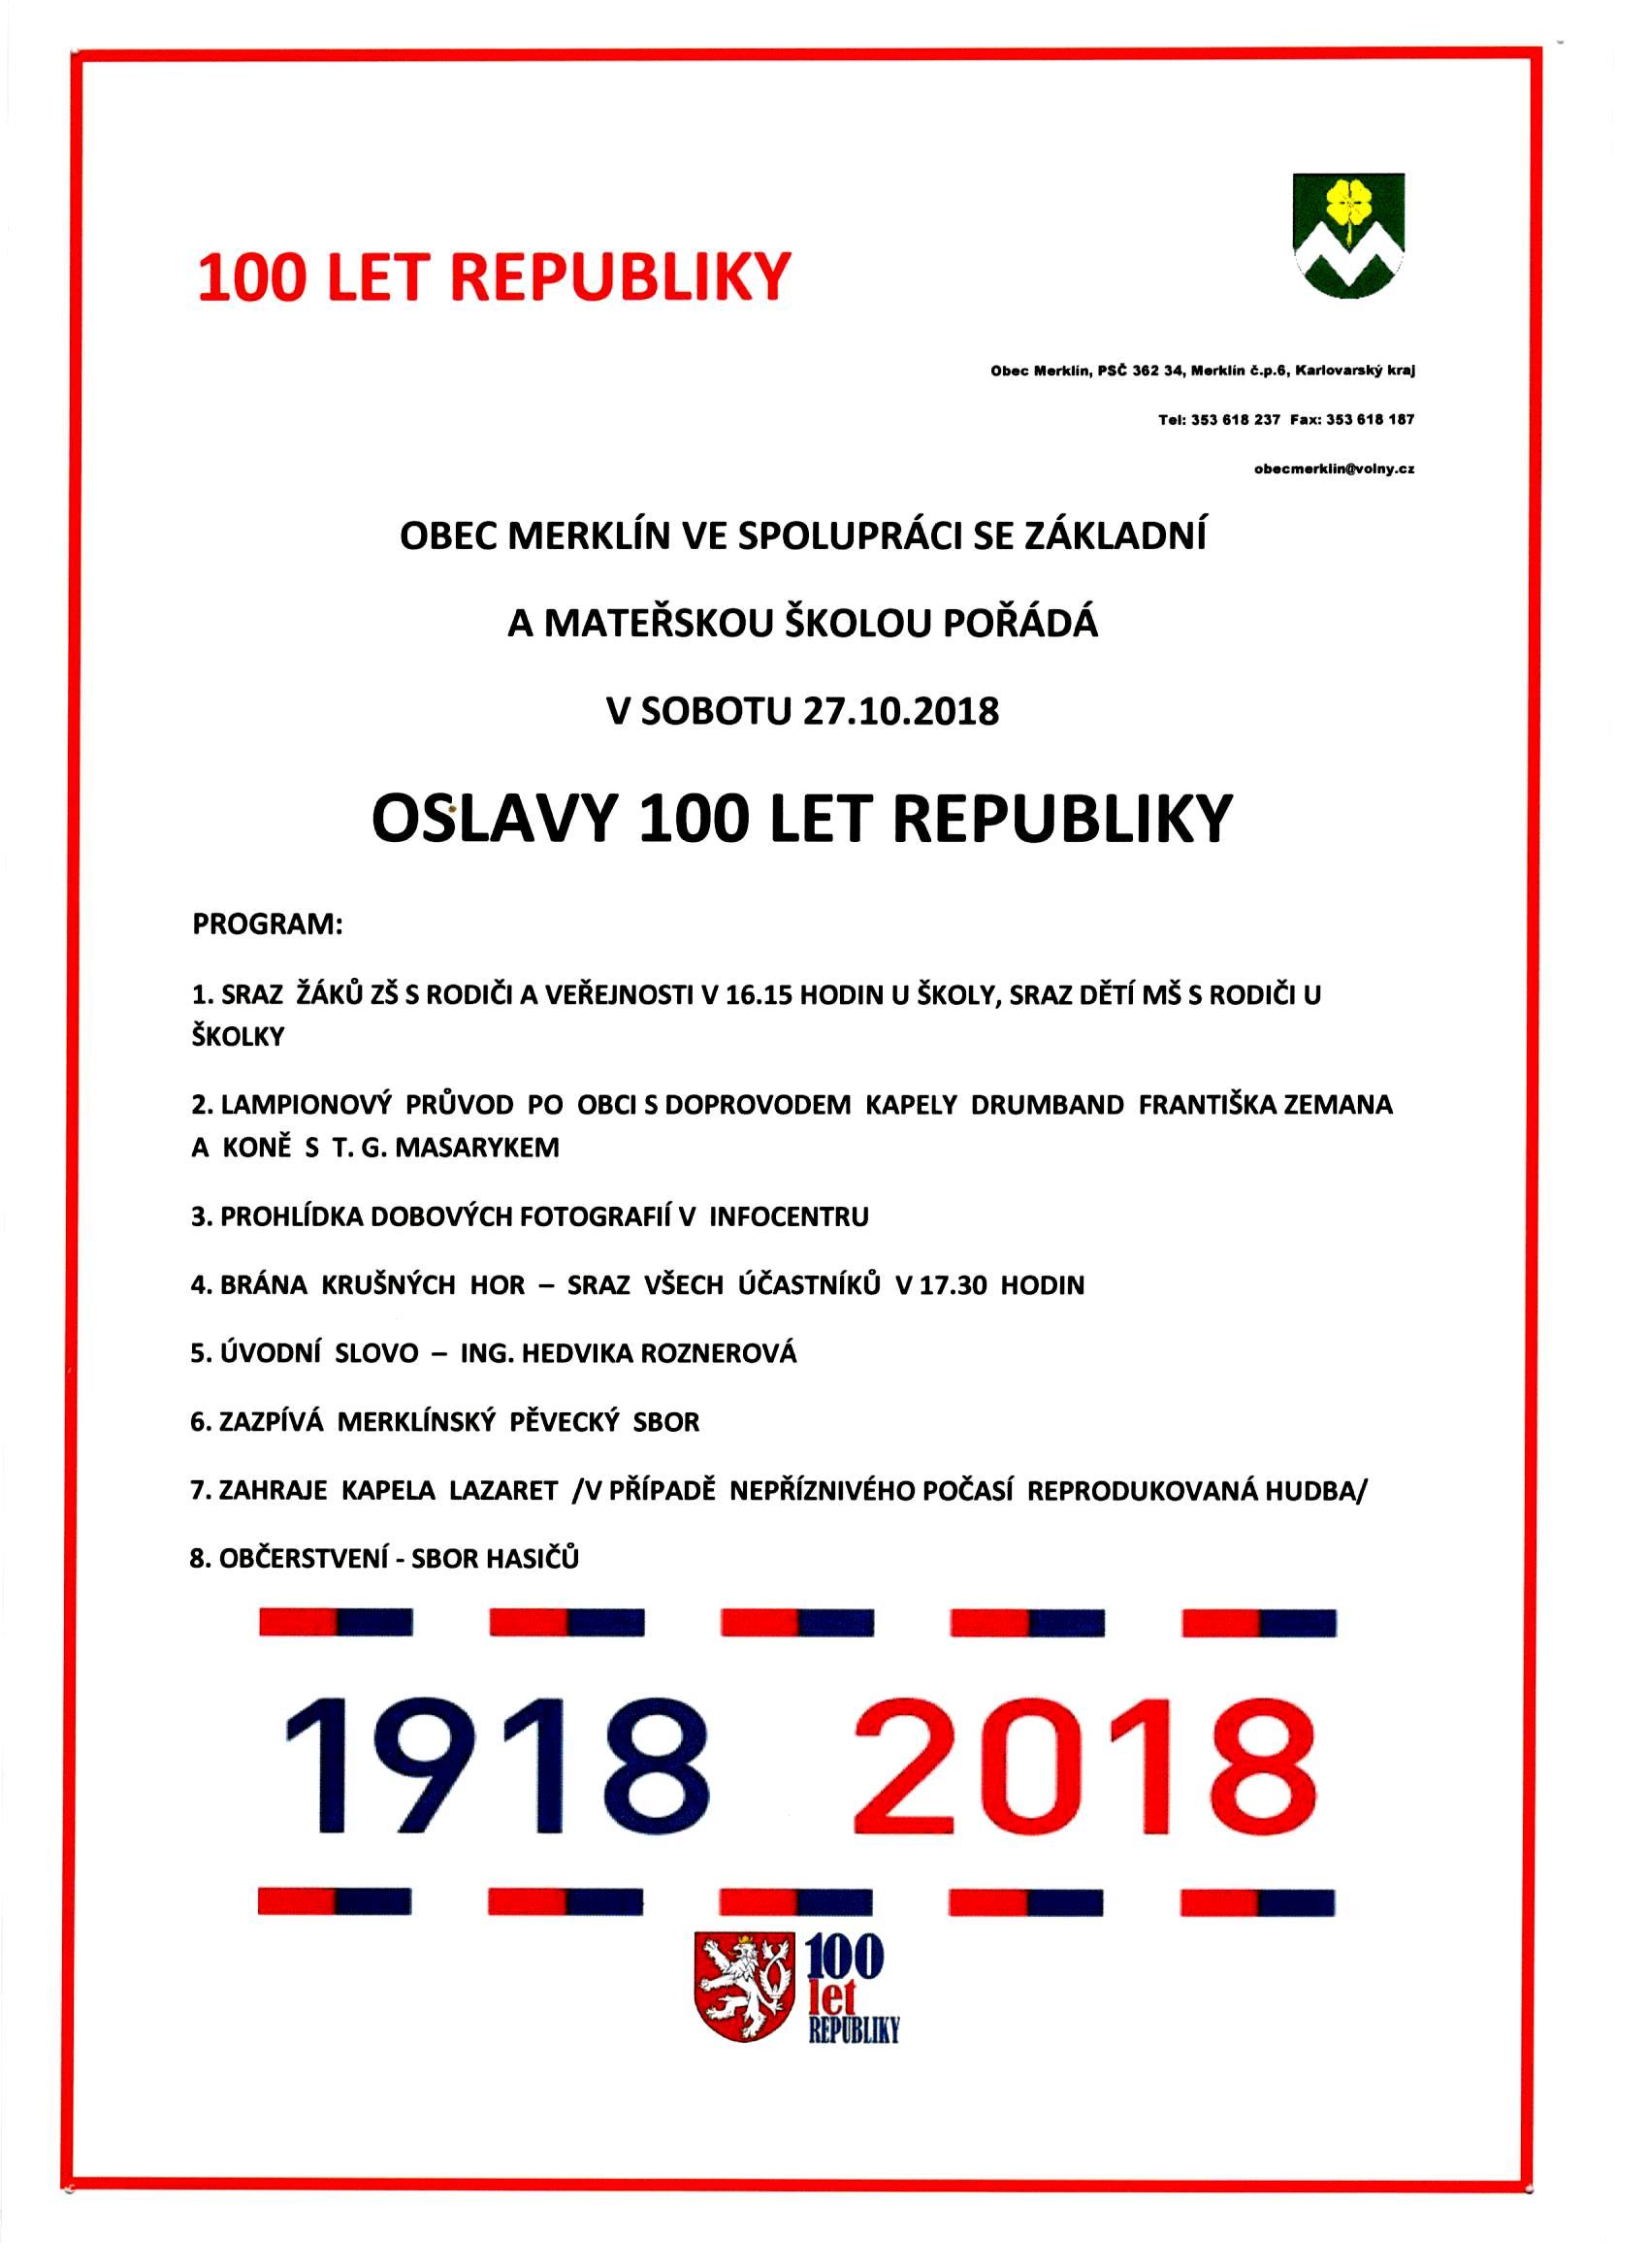 Oslavy 100. let republiky